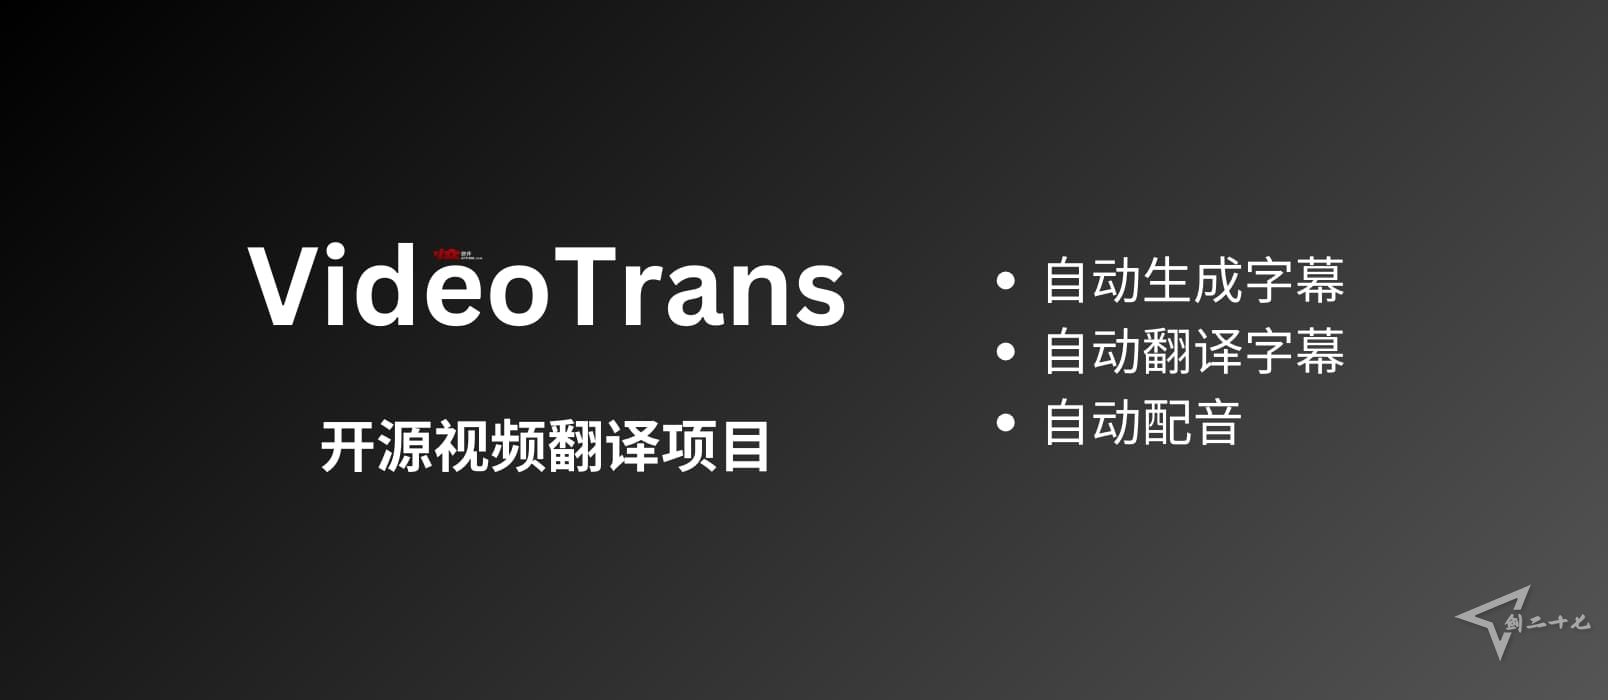 VideoTransv1.0.0.2 – 开源视频翻译项目：自动识别并生成字幕后，翻译 + 配音